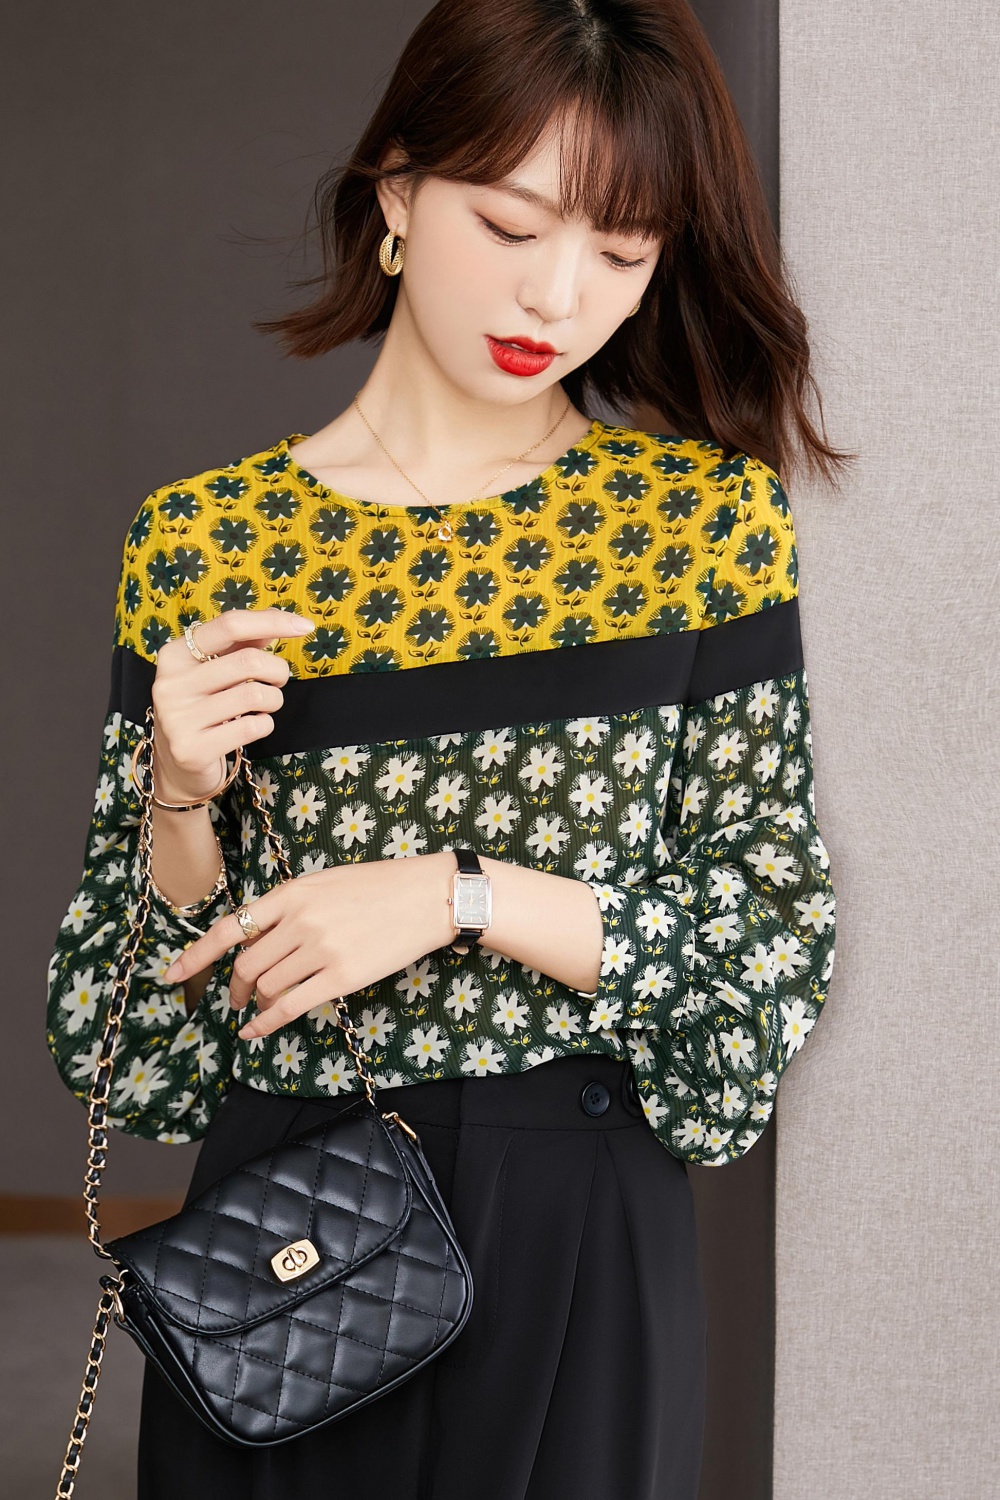 France style daisy minority chiffon shirt autumn floral tops